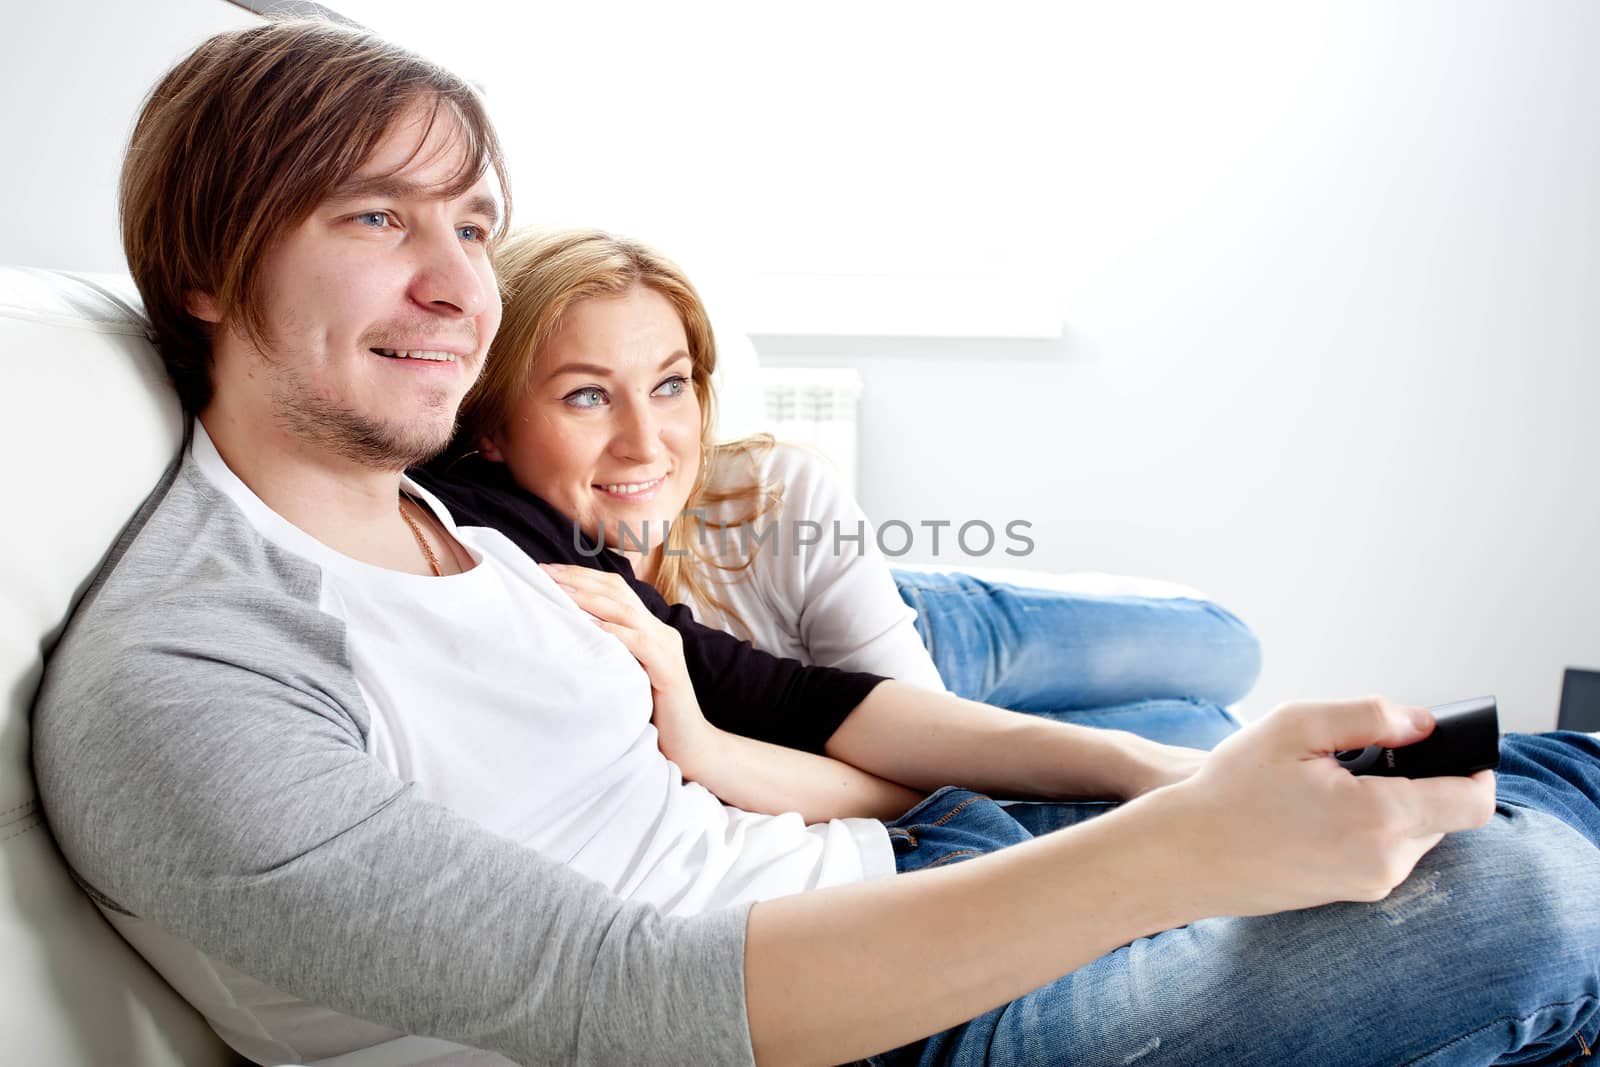 Happy couple watching TV in living room 